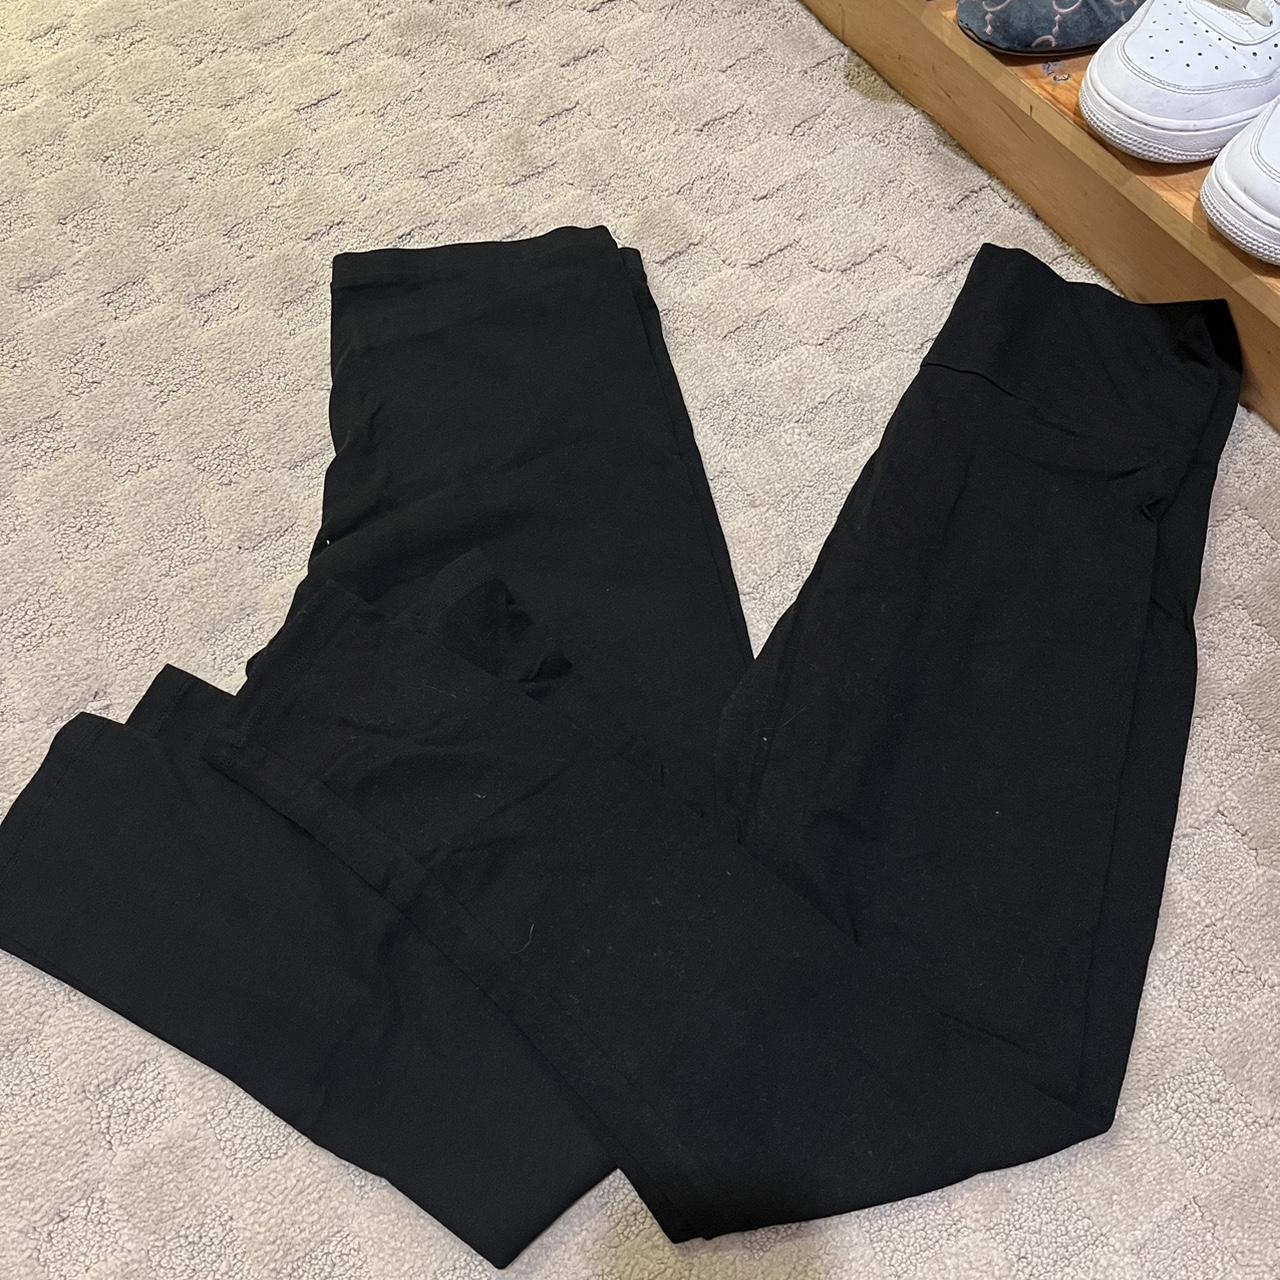 black leggings (2 pairs but can buy only one) #black - Depop